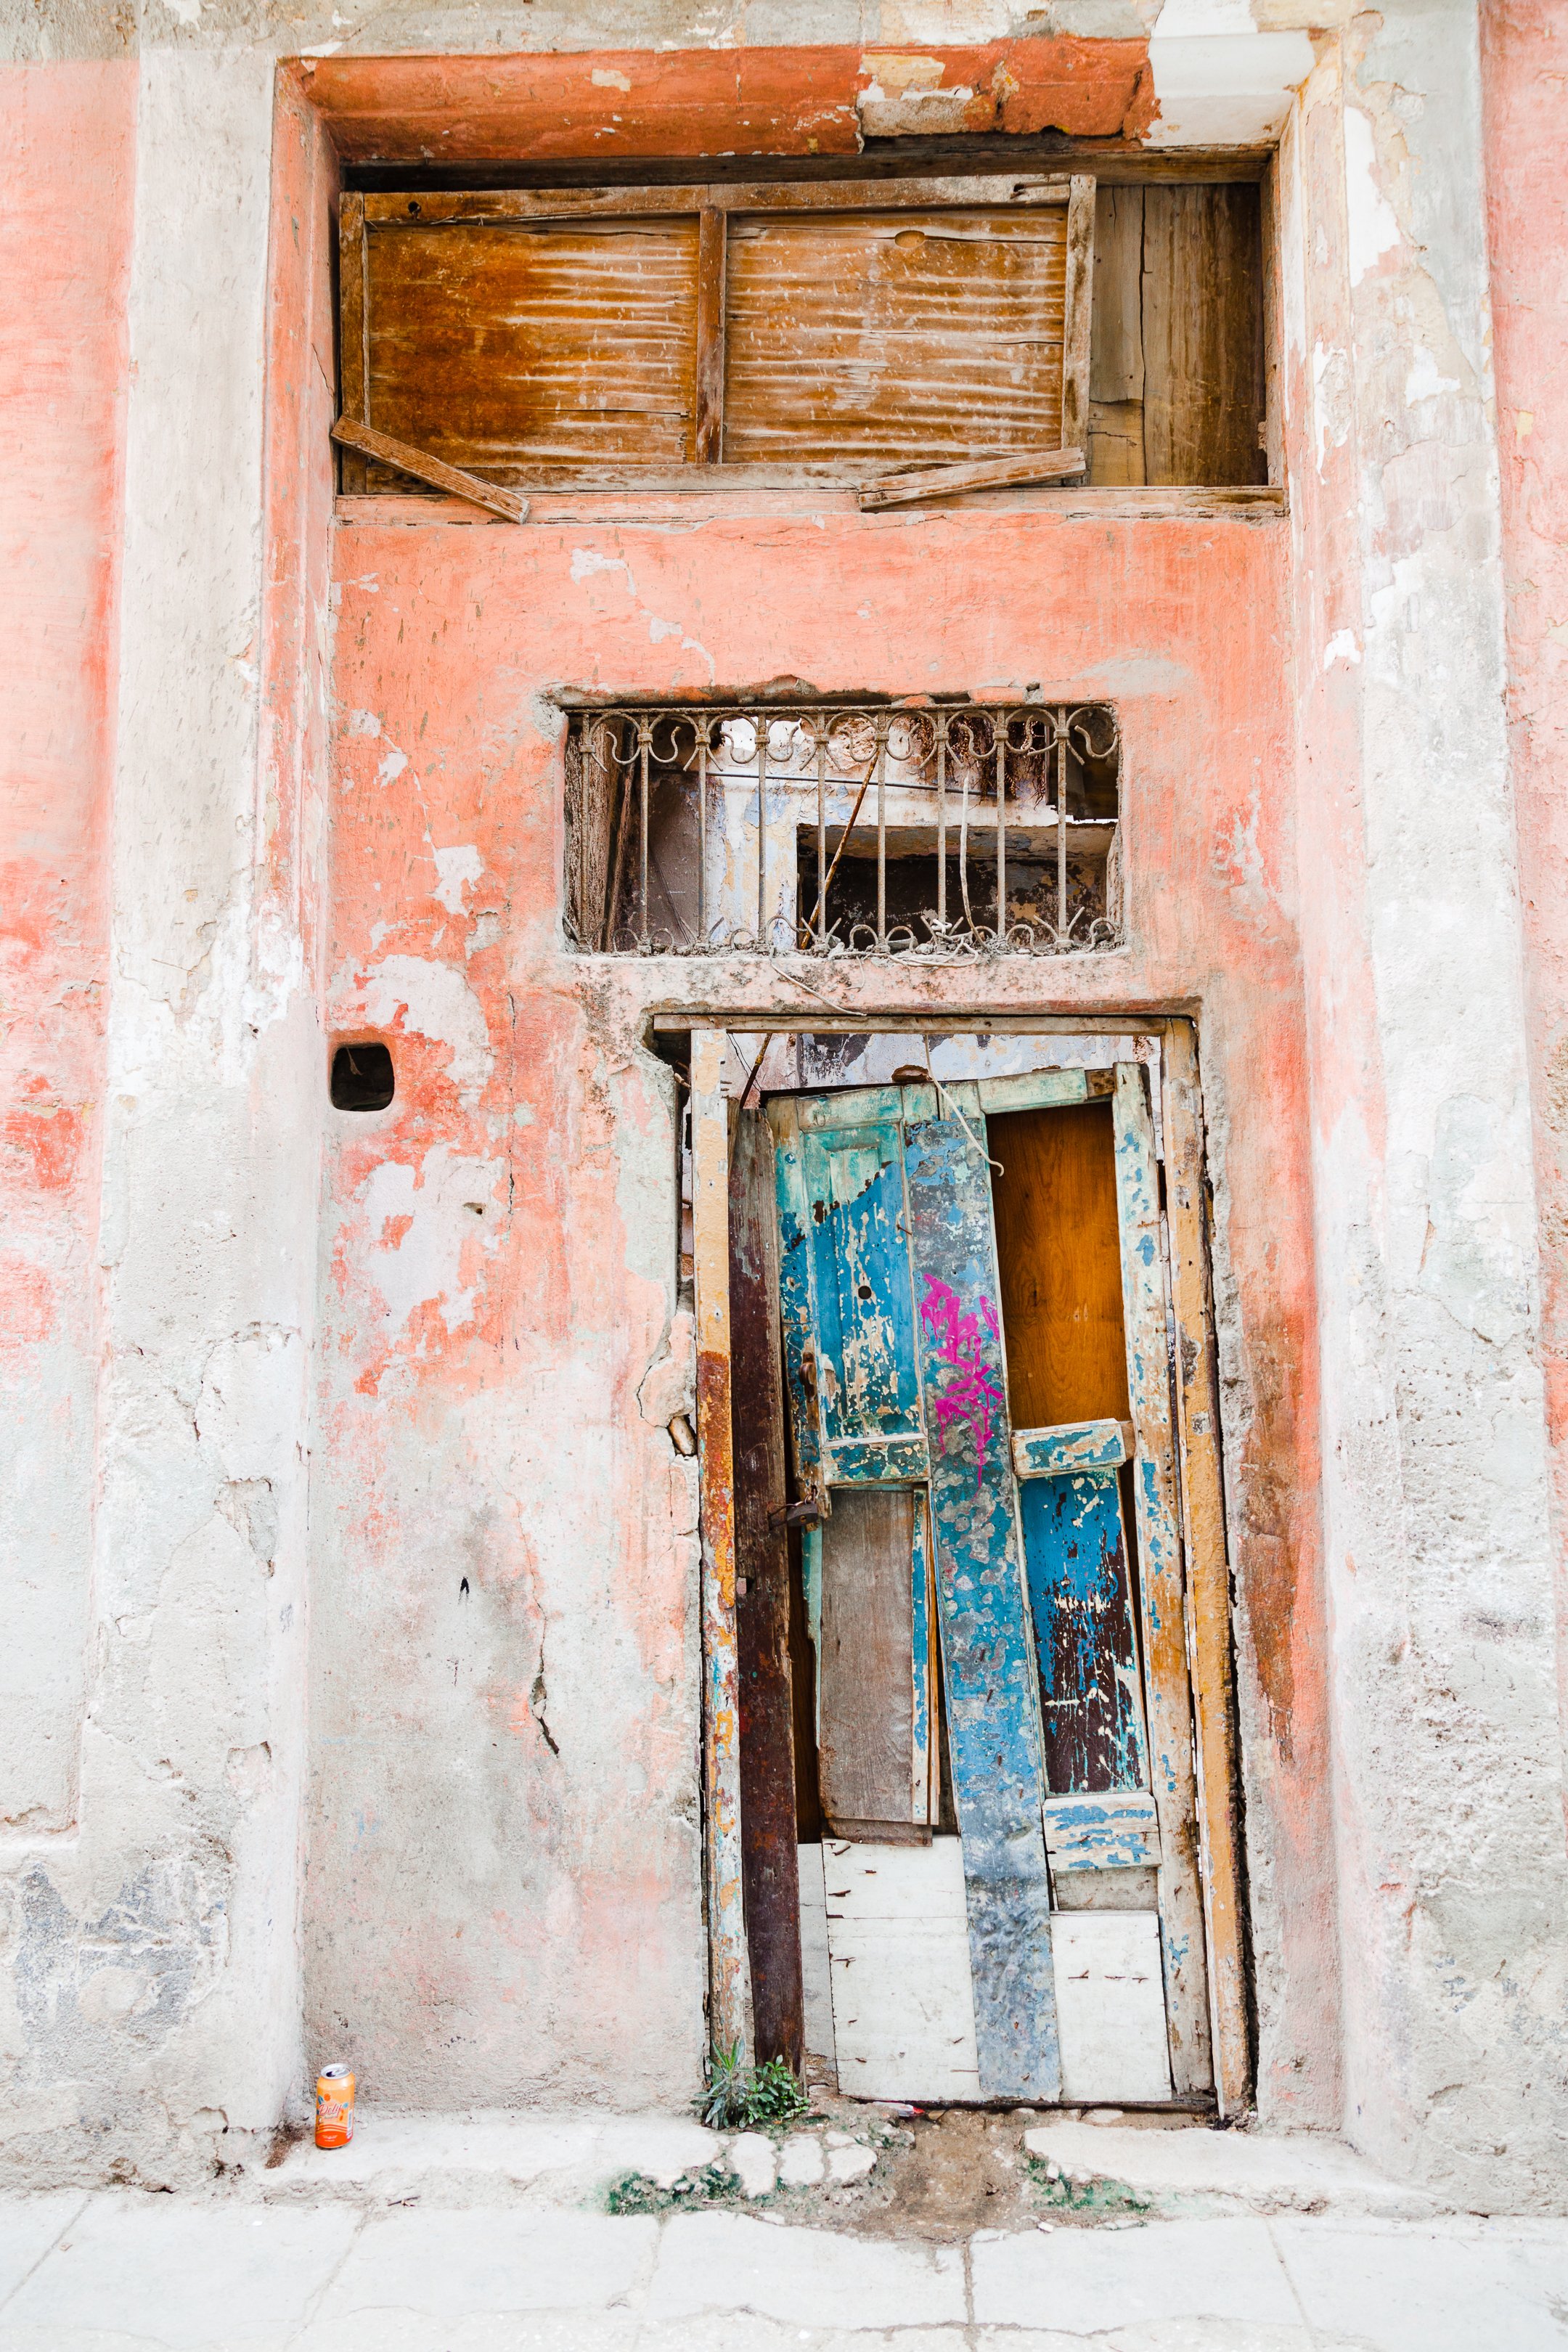  Life tests, Havanna, Cuba 2019 © Laura Elo 